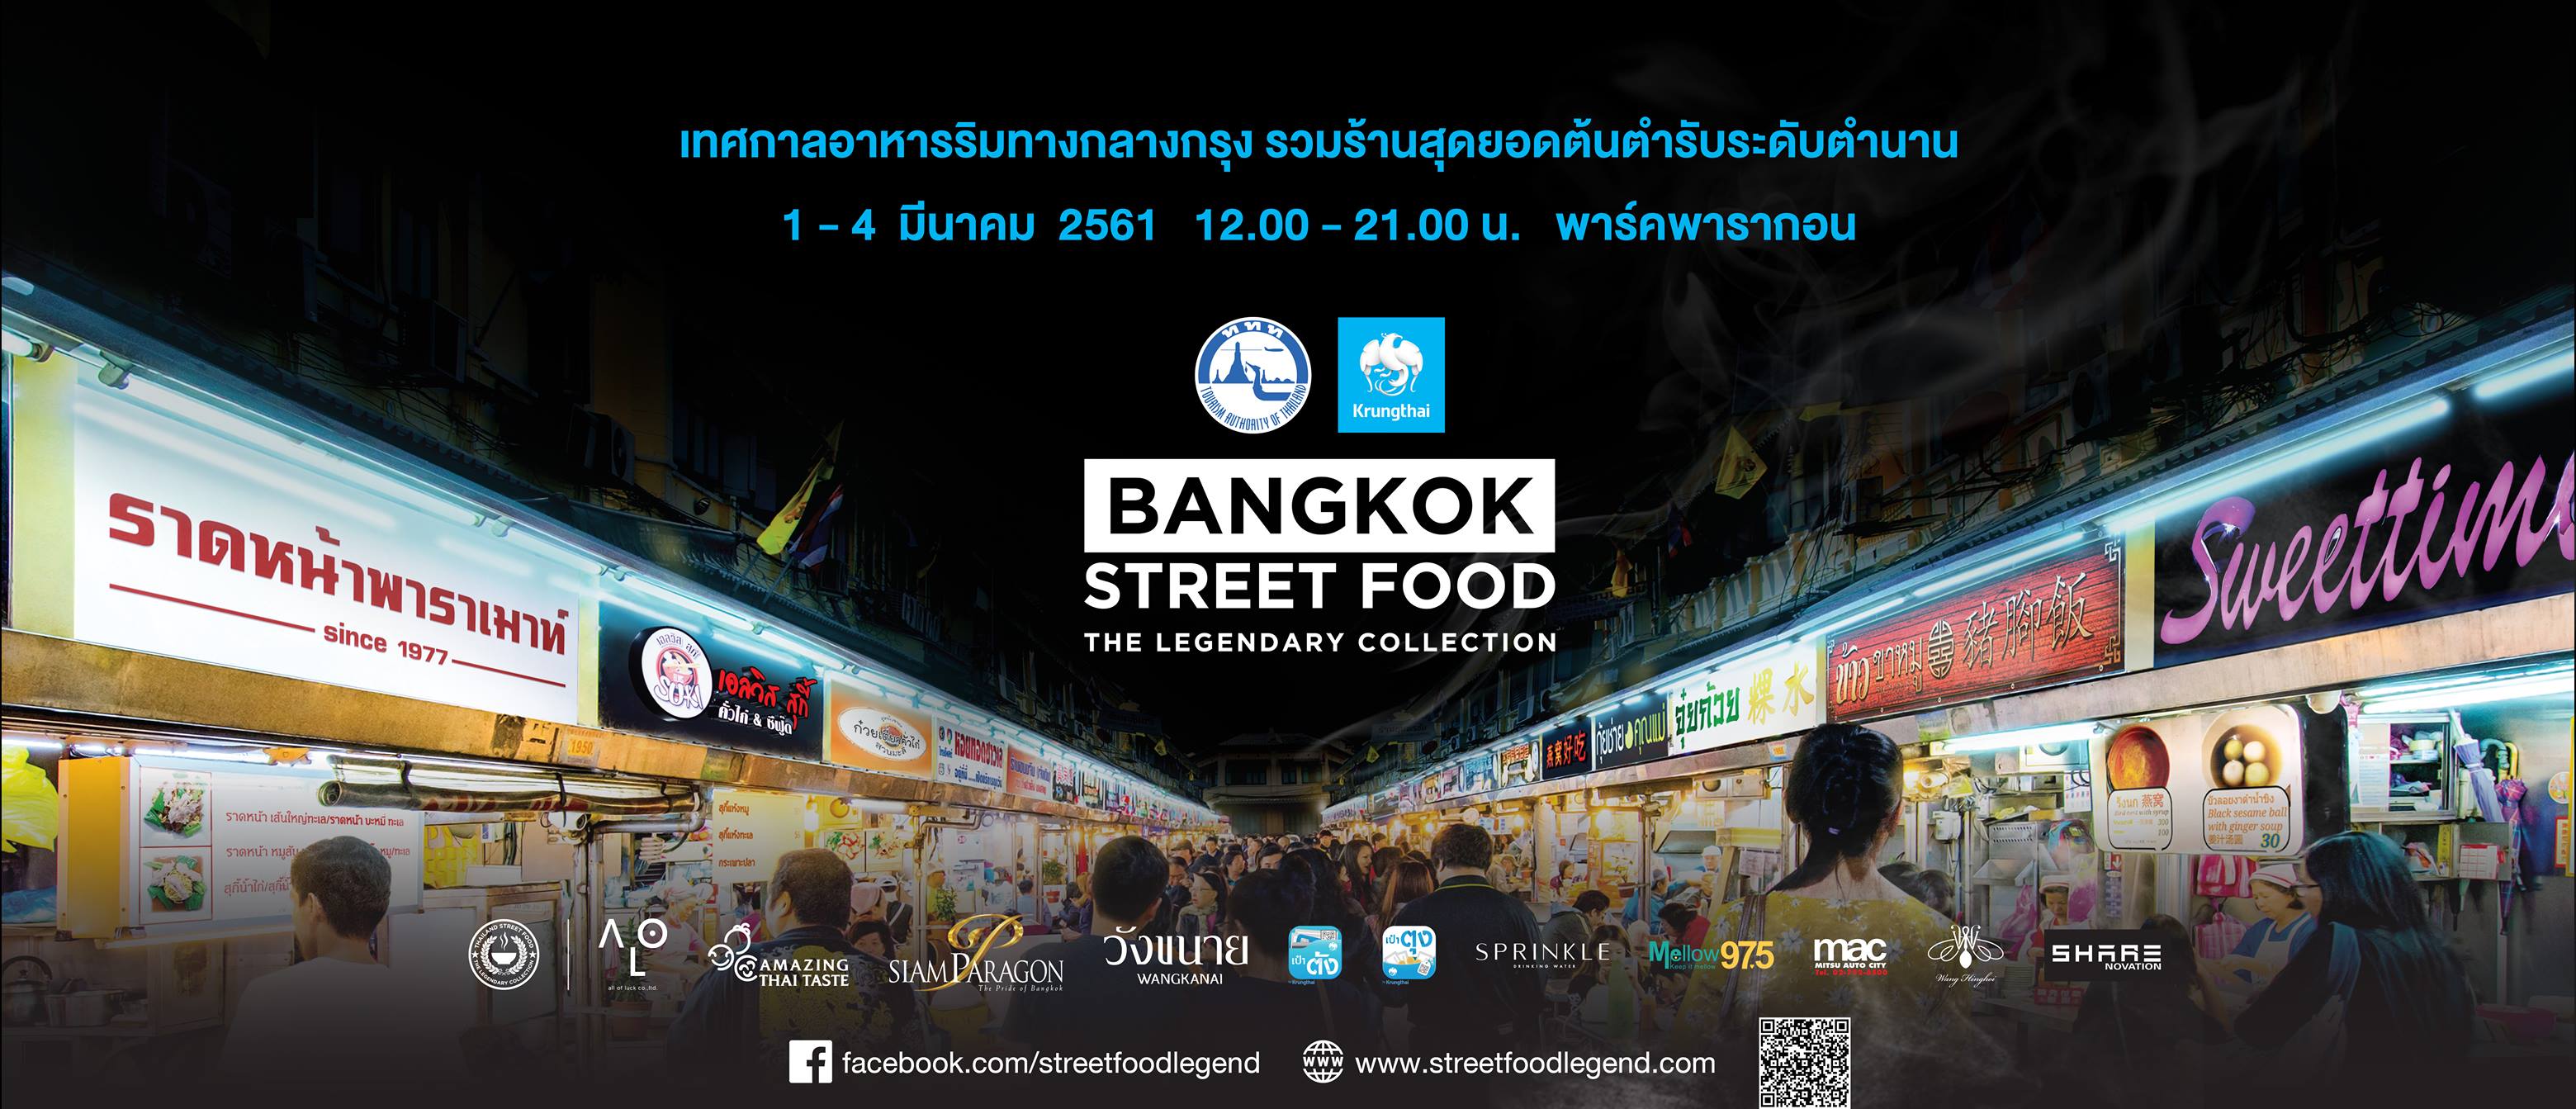 Bangkok Street Food - The Legendary Collection